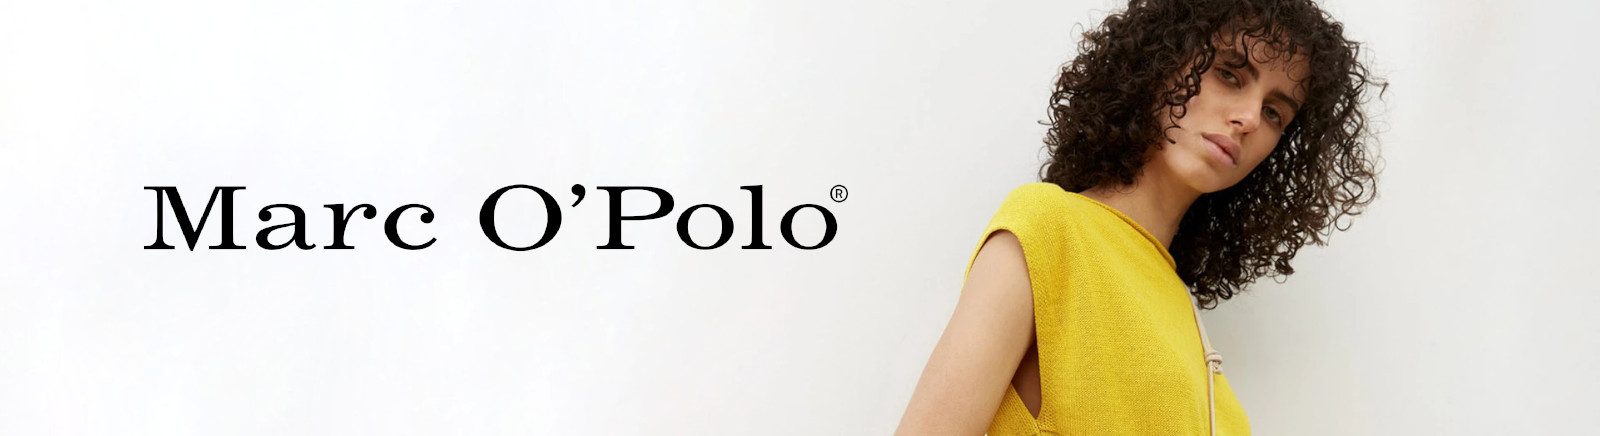 Juppen: Marc O'Polo Pantoletten für Damen online kaufen online shoppen